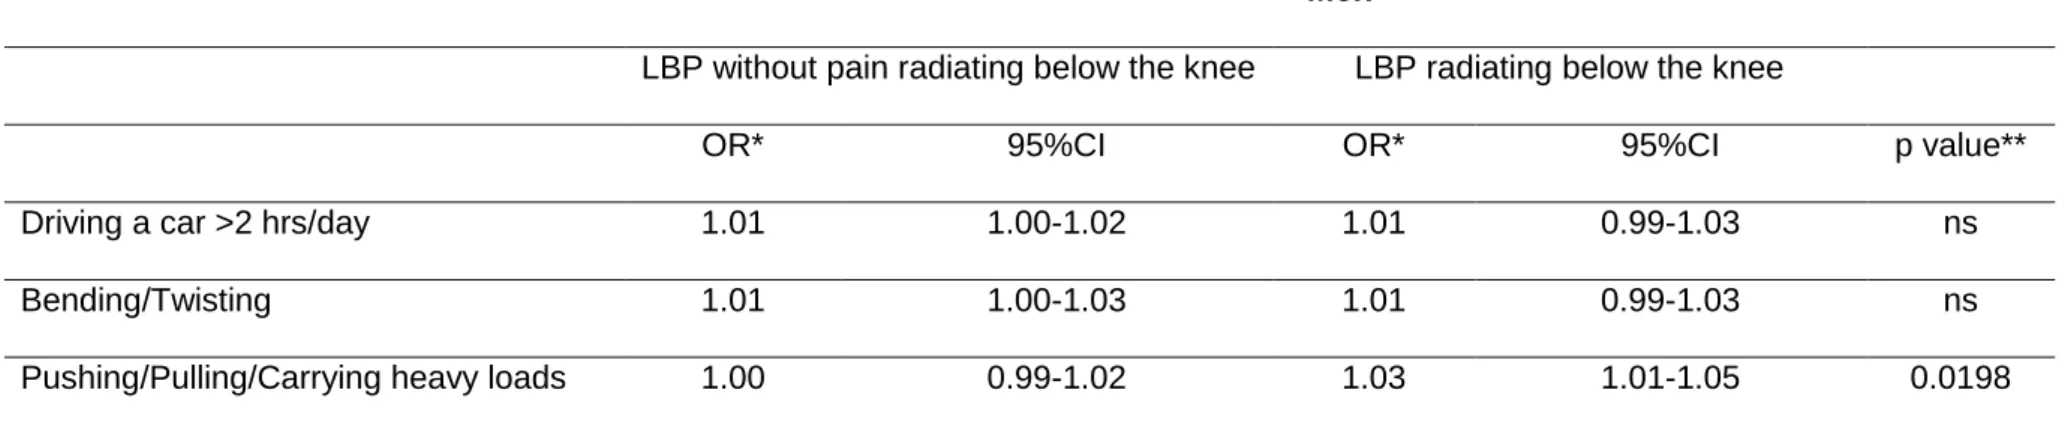 Table 5: Comparison between risk factors for LBP radiating below the knee vs other LBP for men   Men  